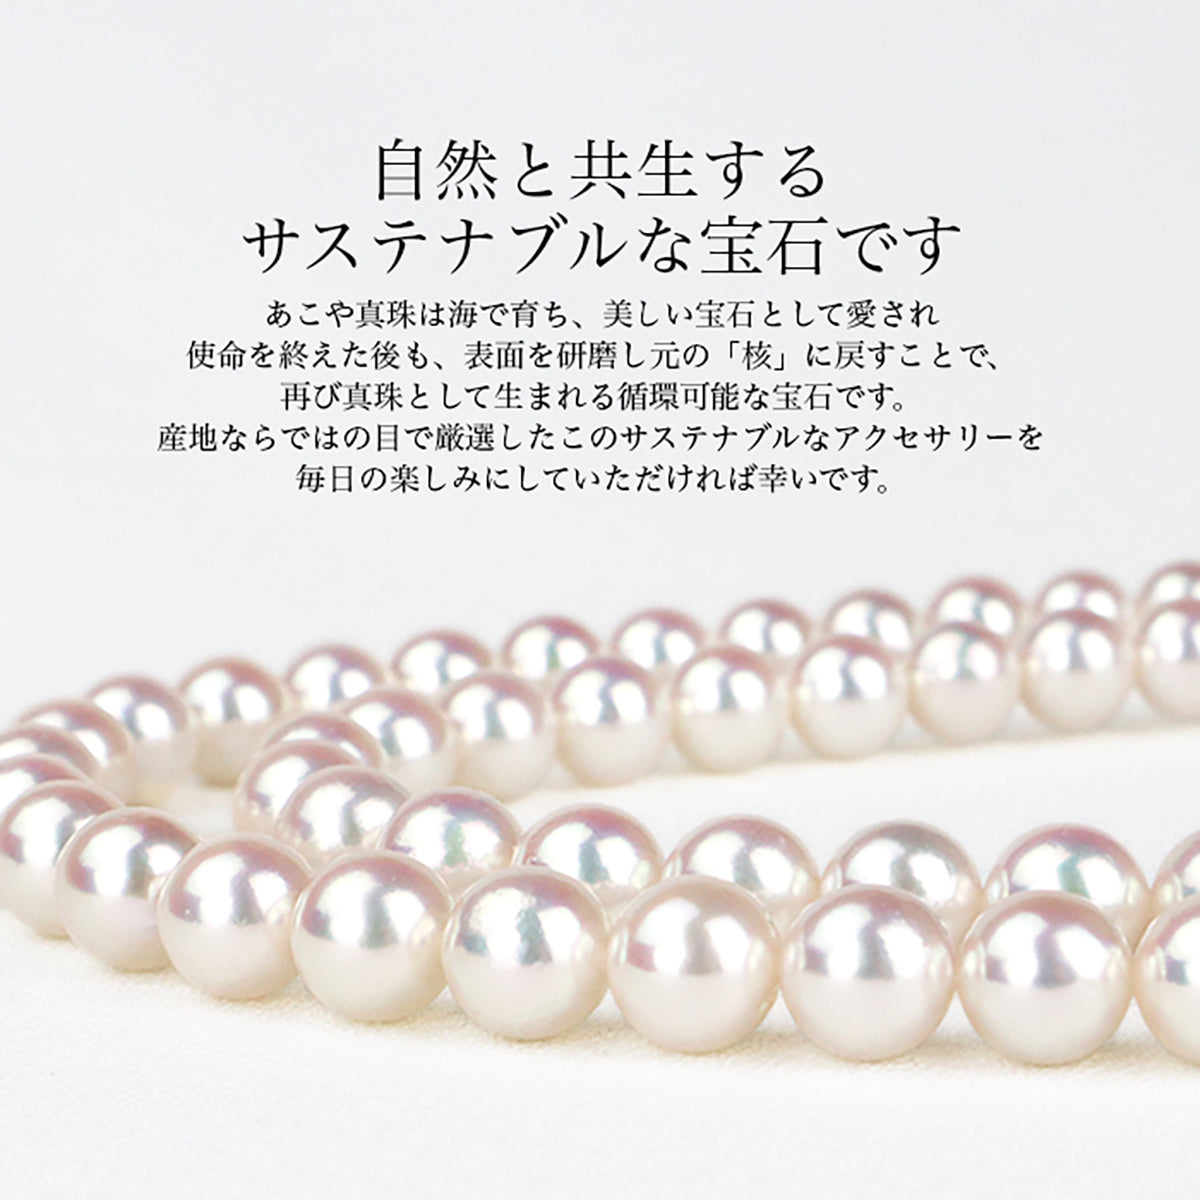 Baby Pearl 5 Bead Hook Earrings Women's Titanium White 4.0-4.5mm Akoya Pearl